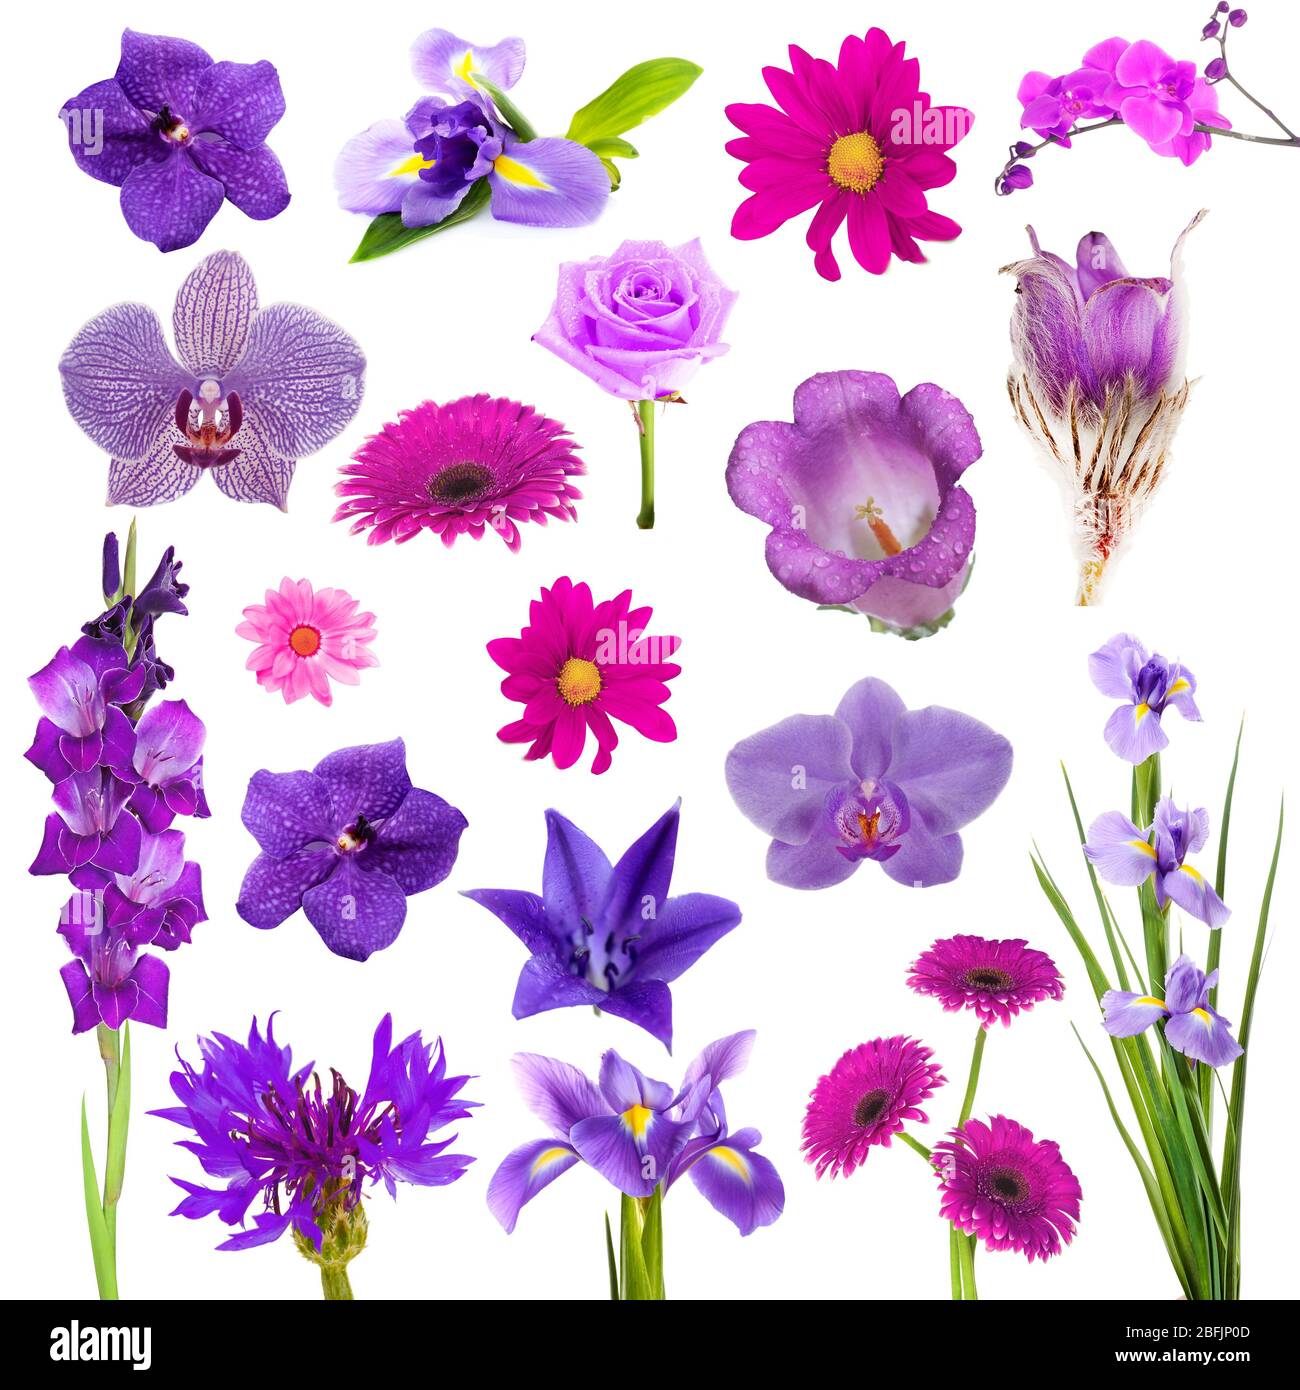 Collage of beautiful purple flowers Stock Photo - Alamy